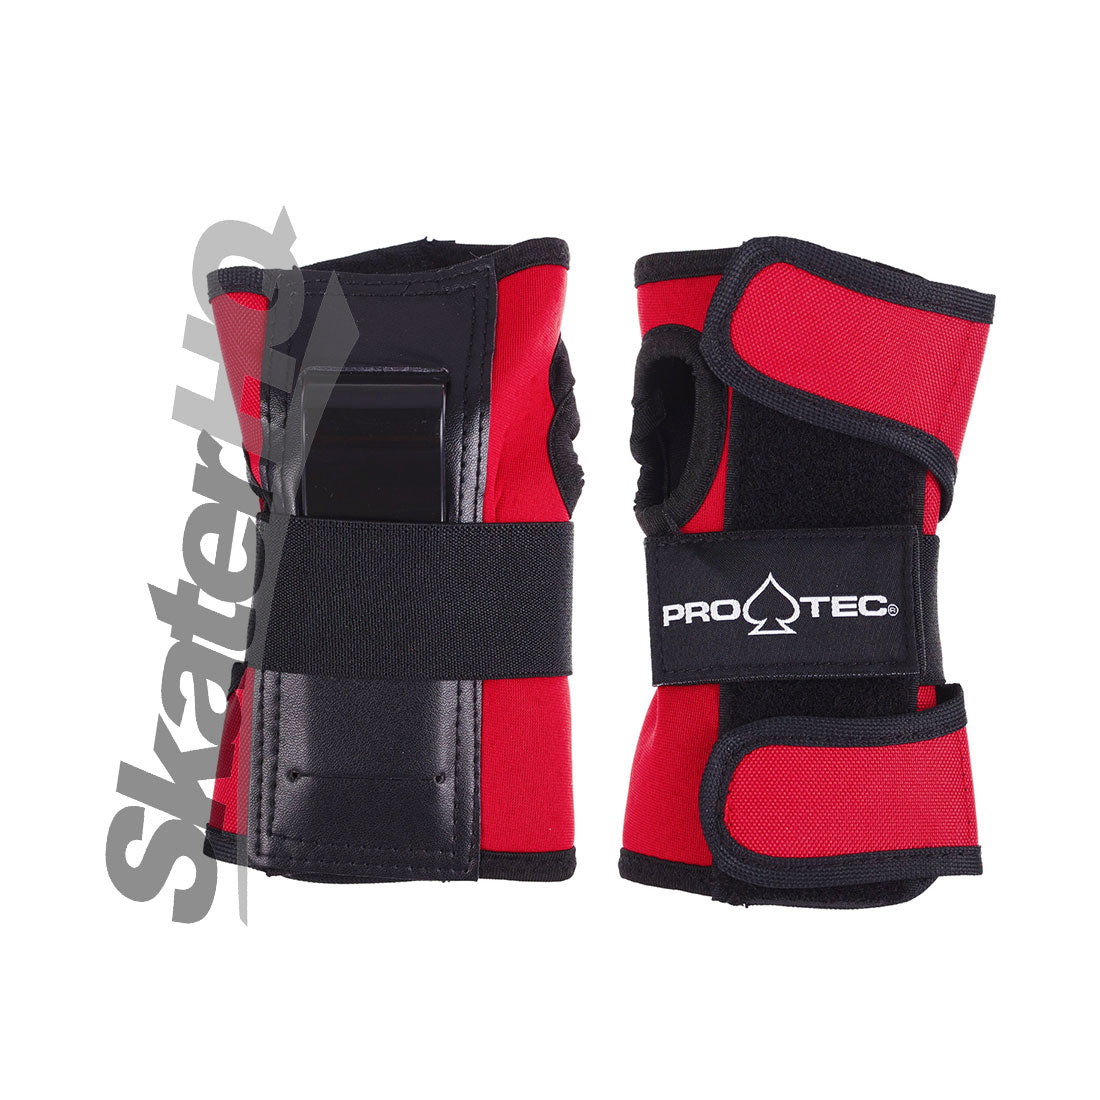 Pro-Tec Street Wrist - Red/Black Protective Gear